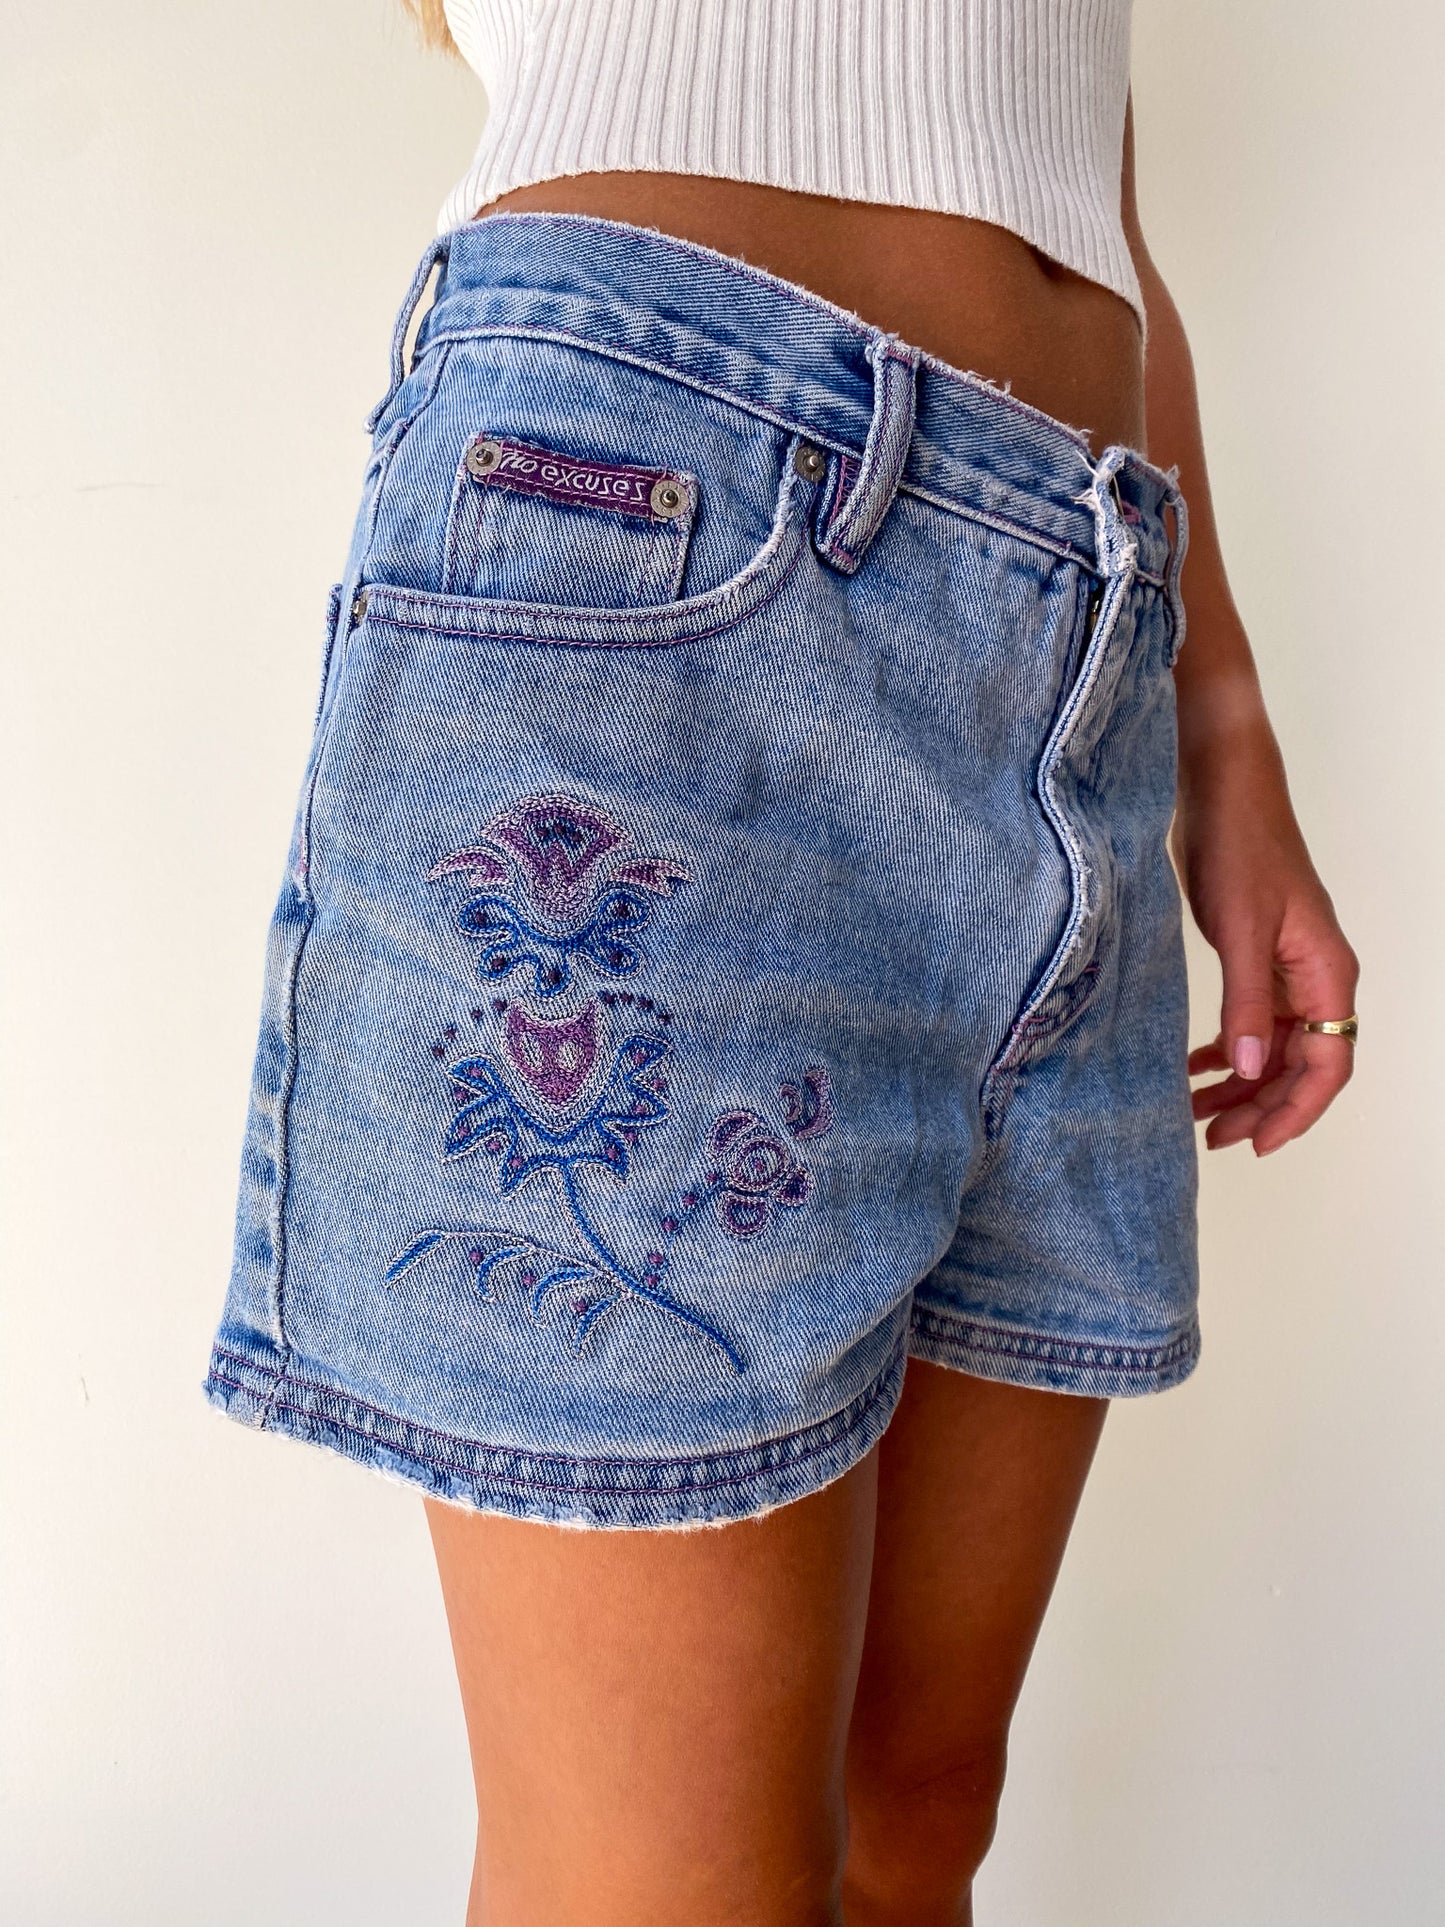 Embroidered Denim Shorts—[28]